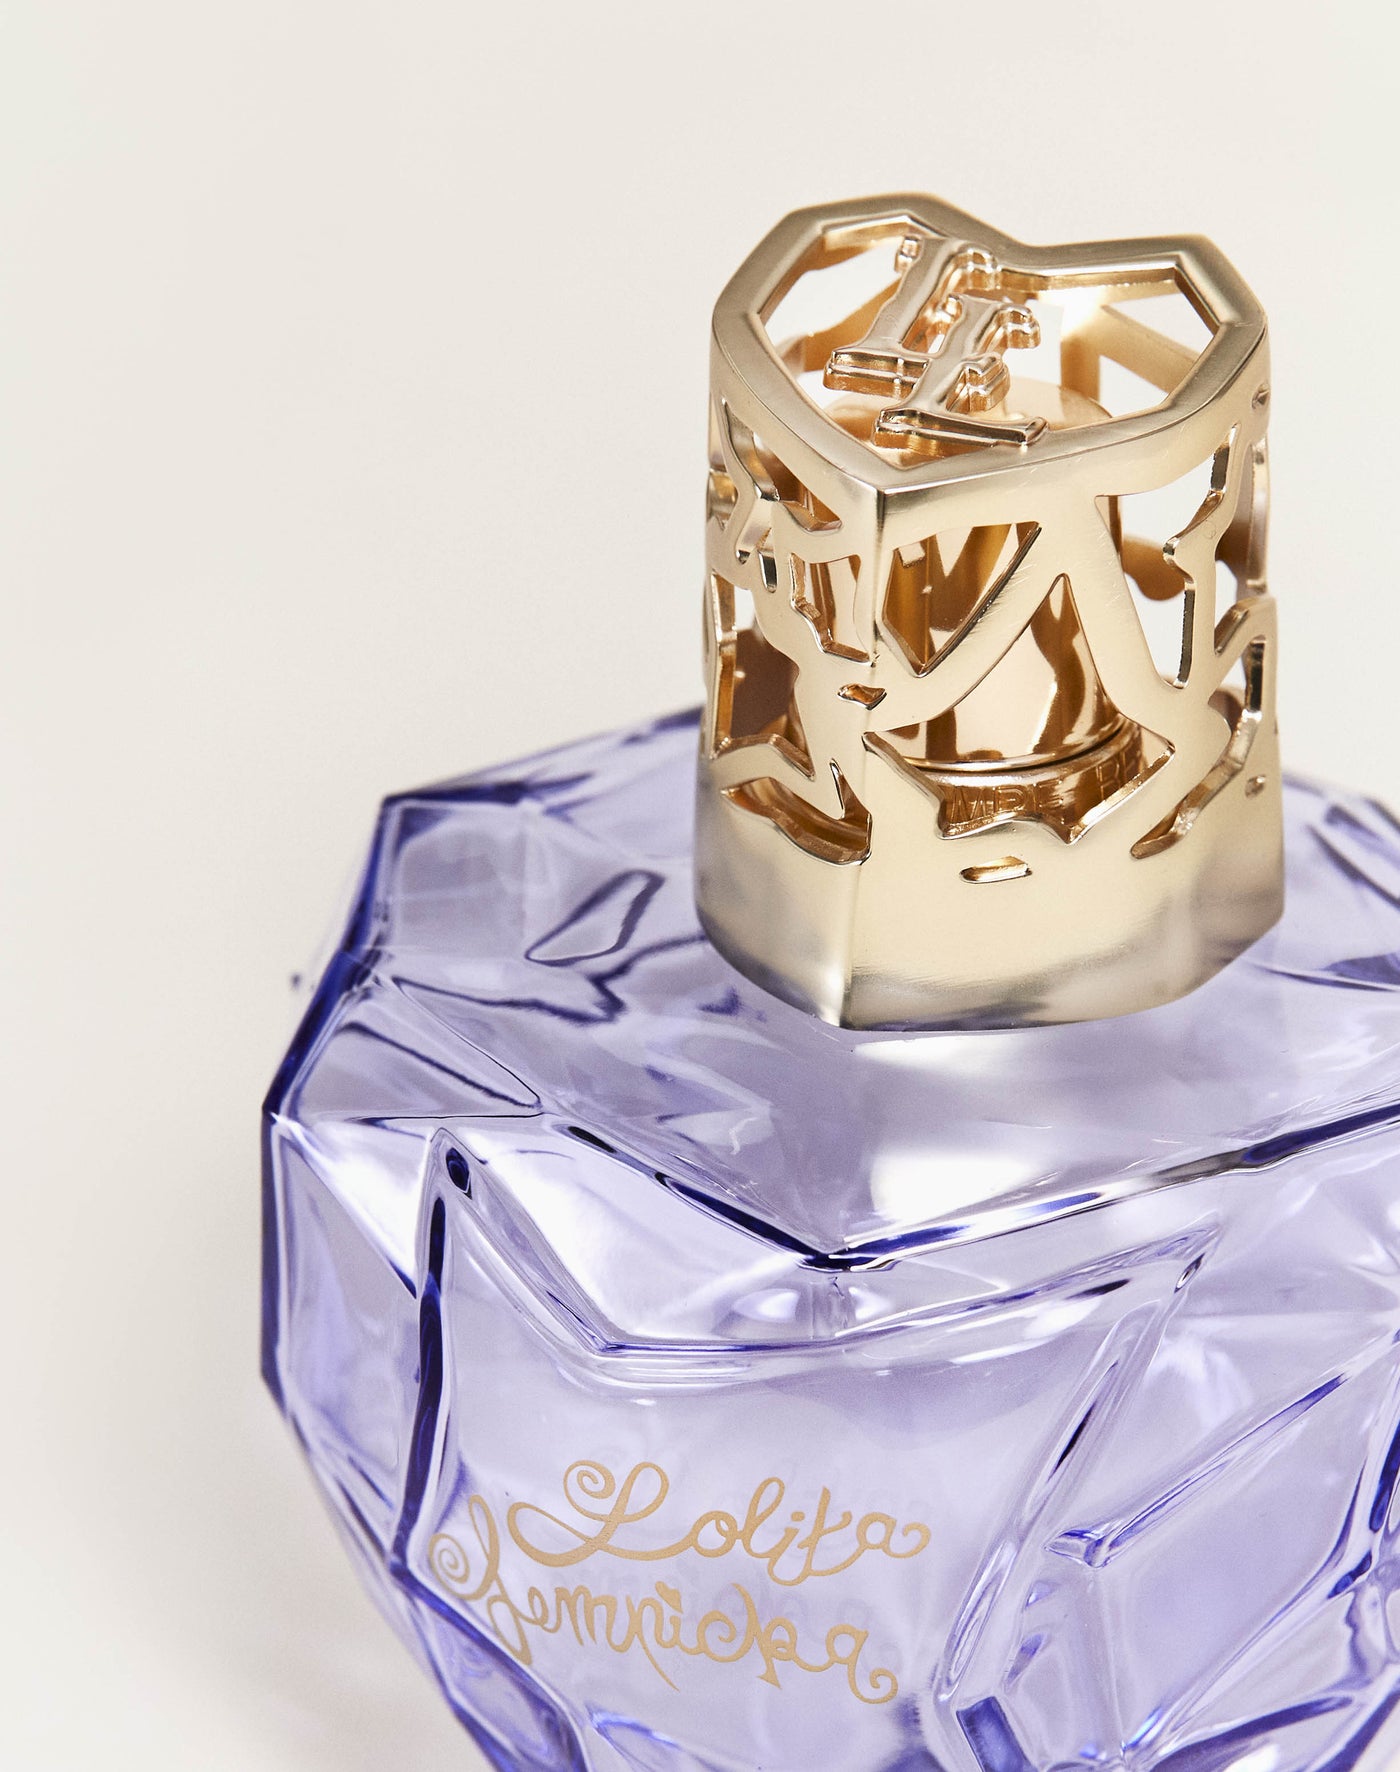 Maison Berger Paris Lolita Lempicka coffret cadeau V.